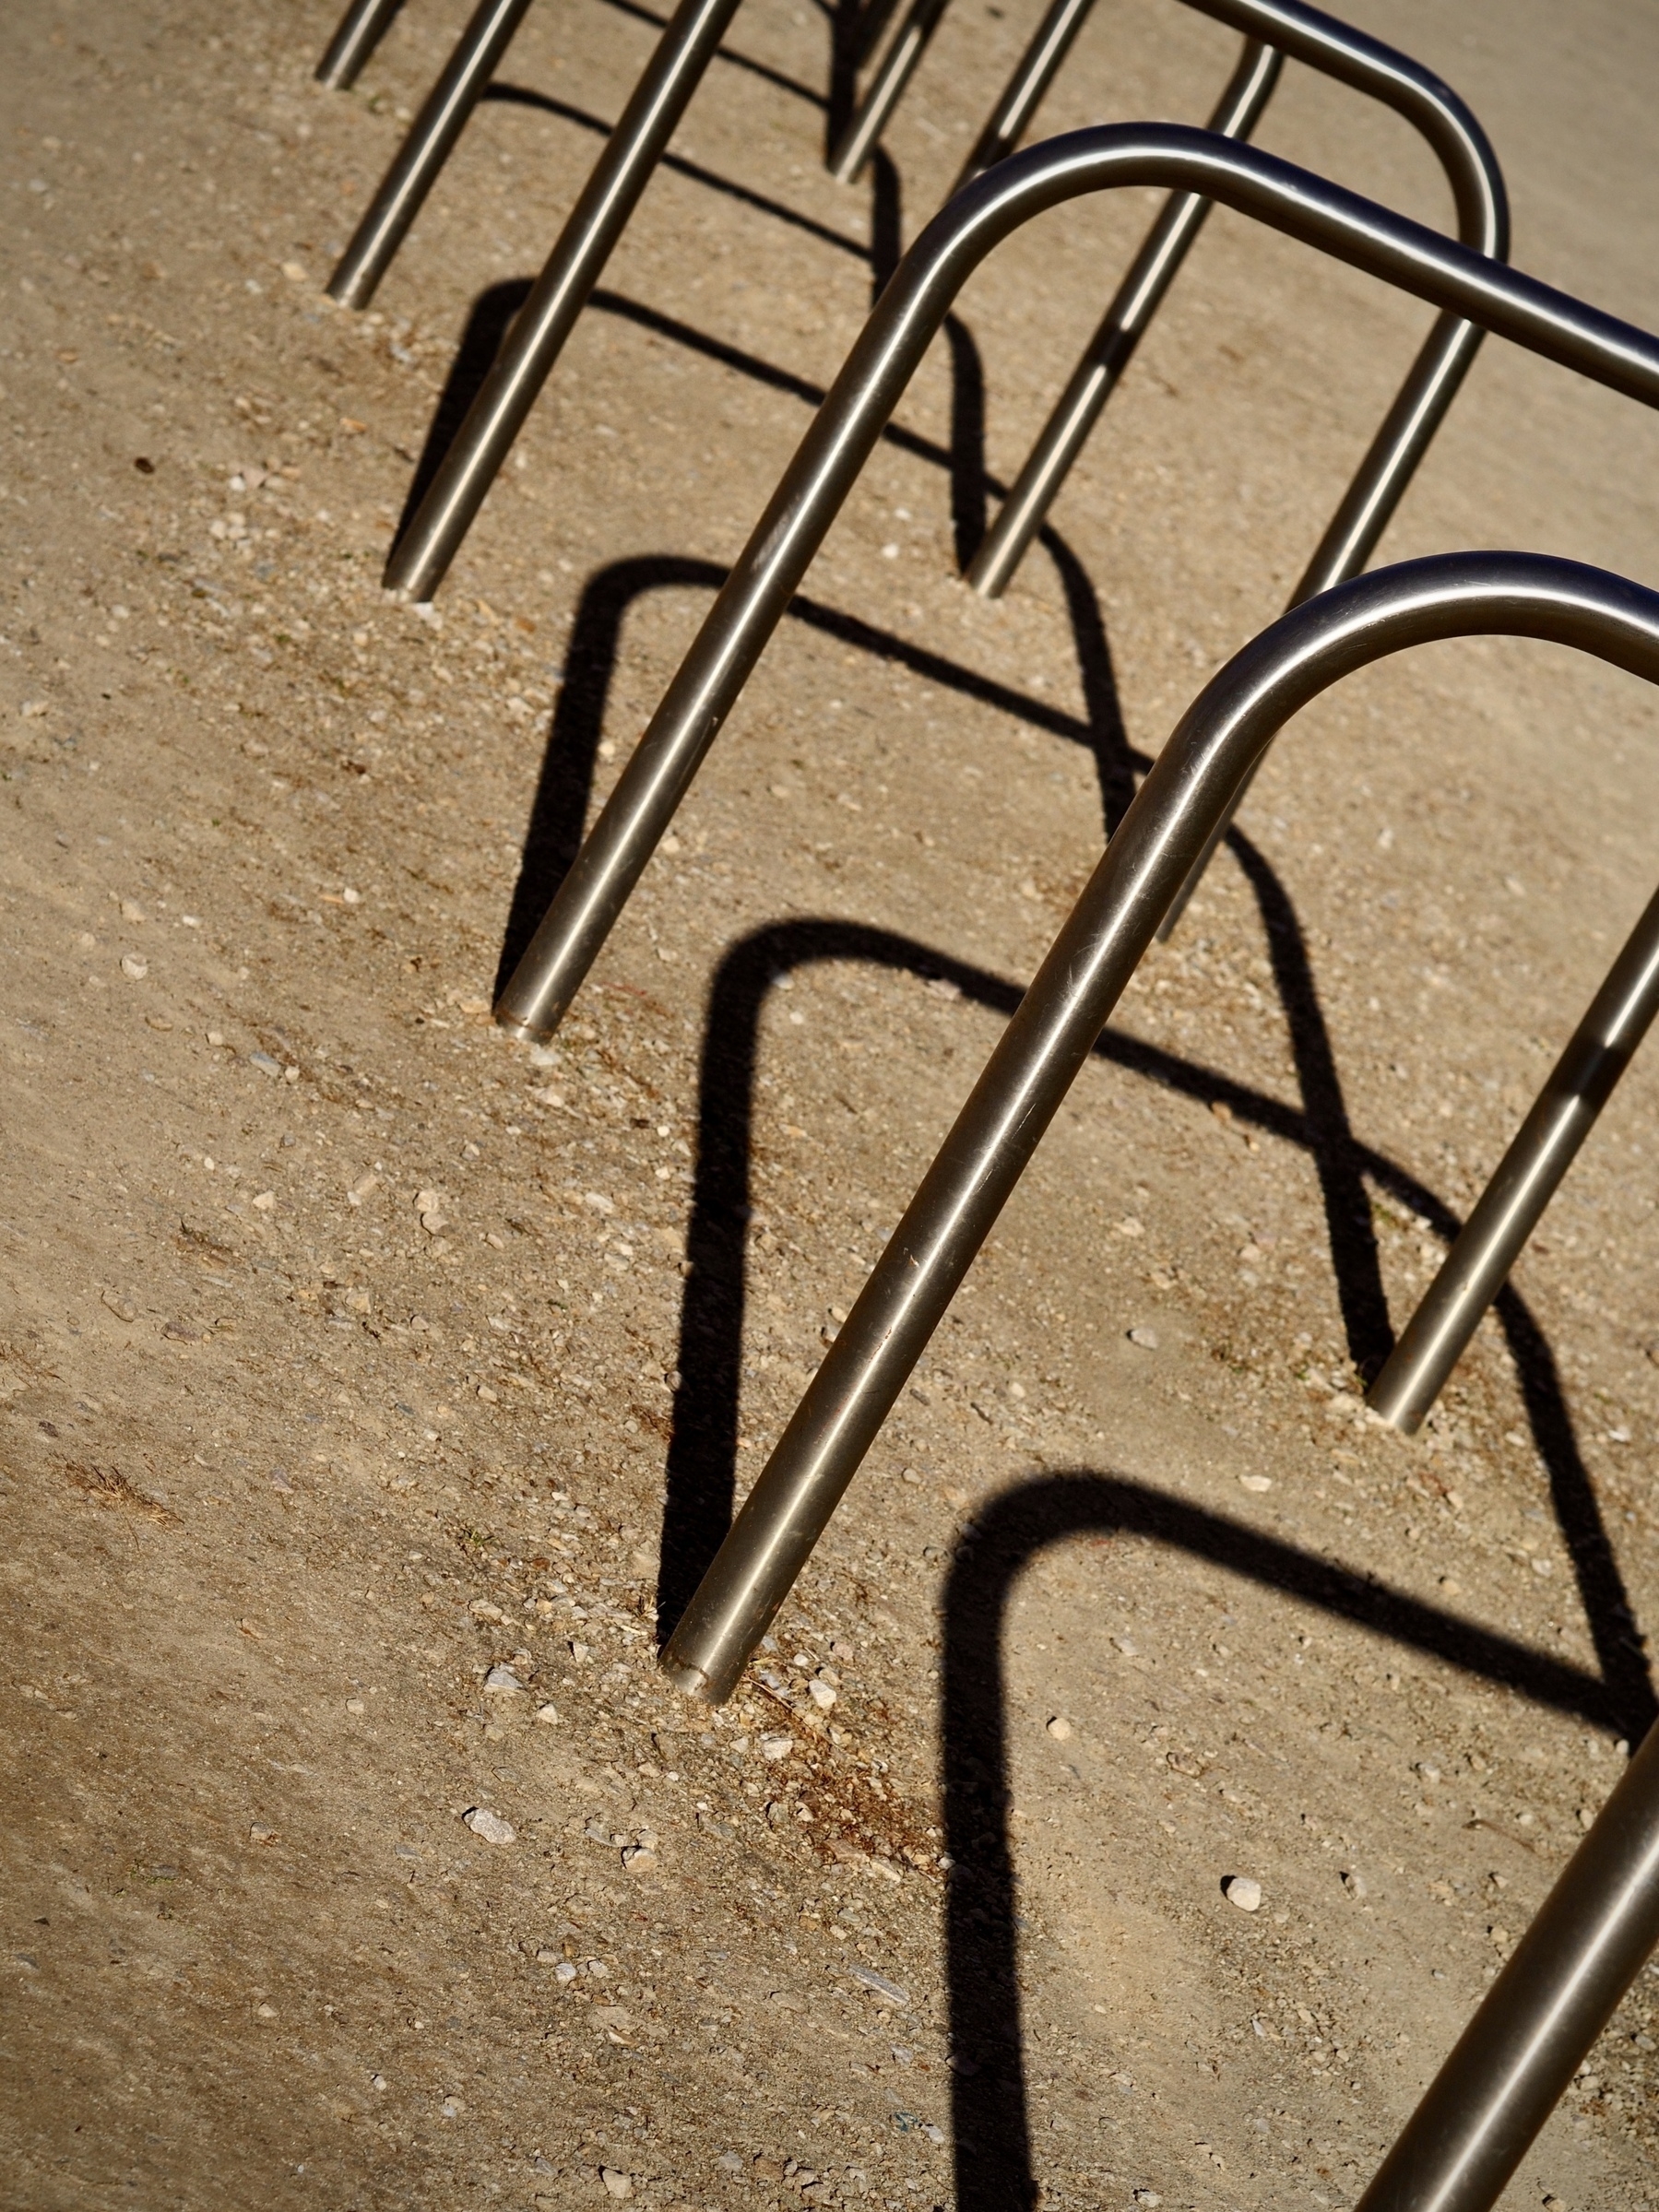 Bike racks and their shadows